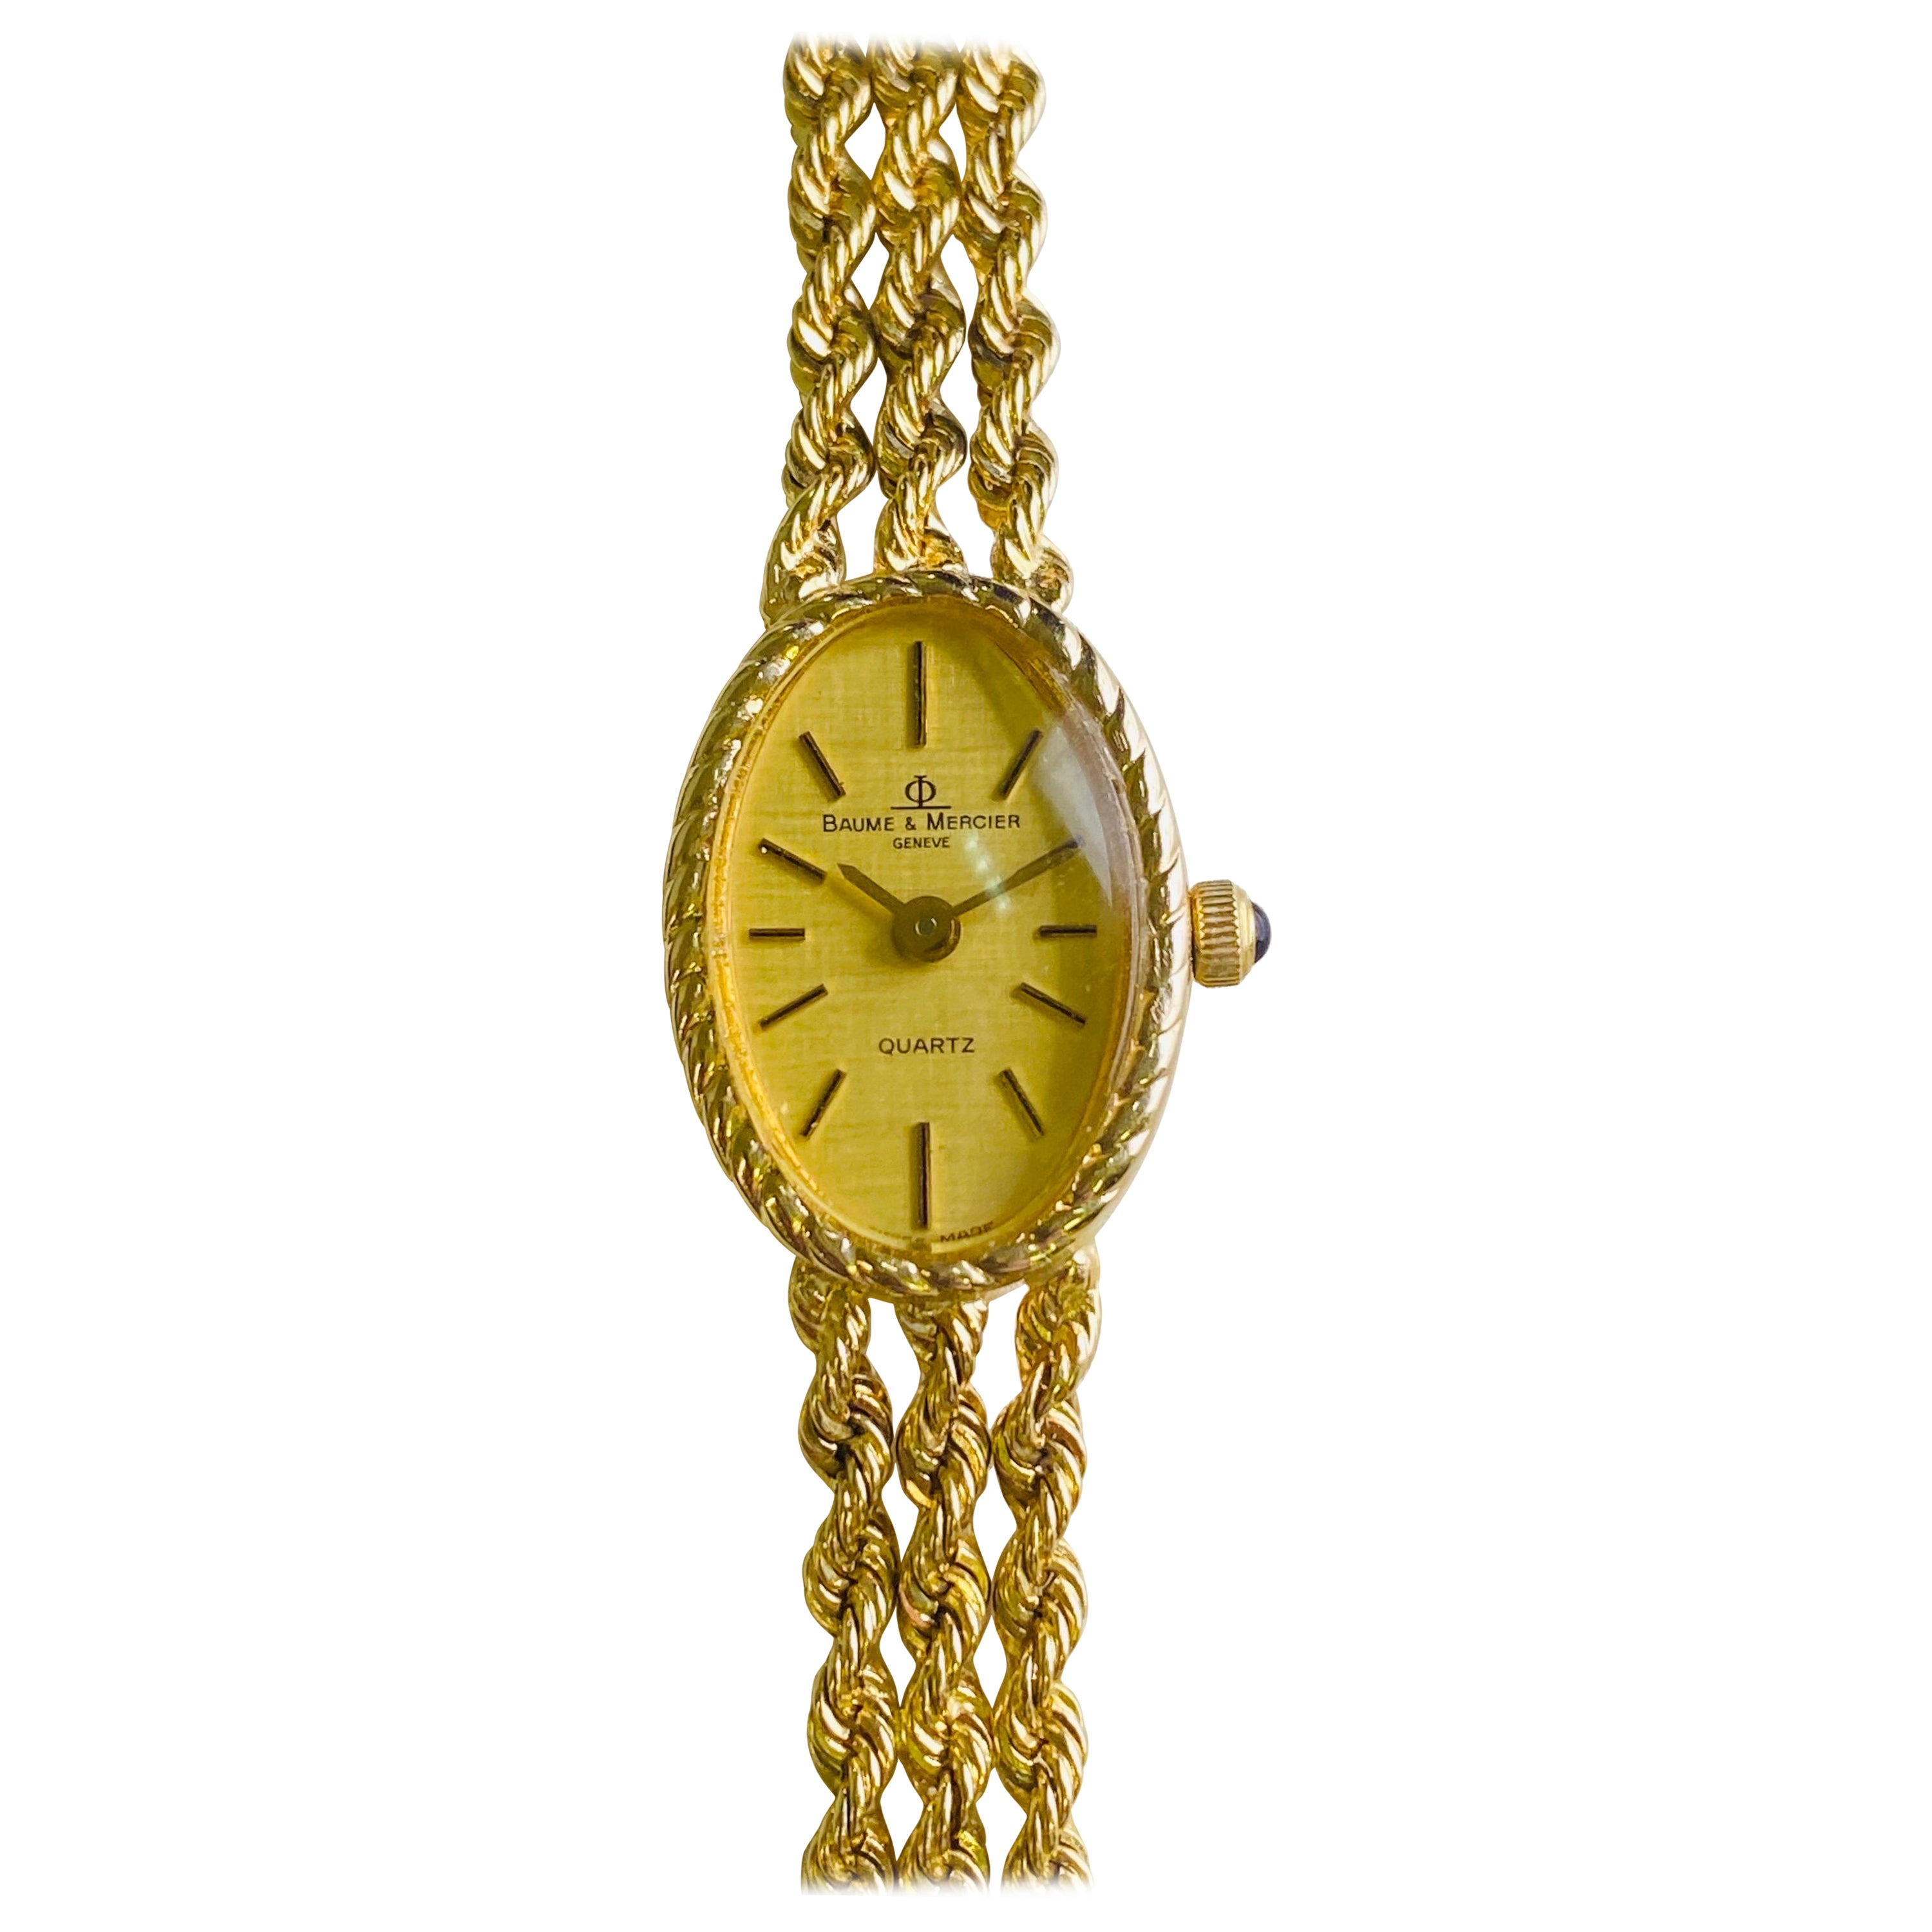 Vintage 14k Yellow Gold Baume et Mercier Watch